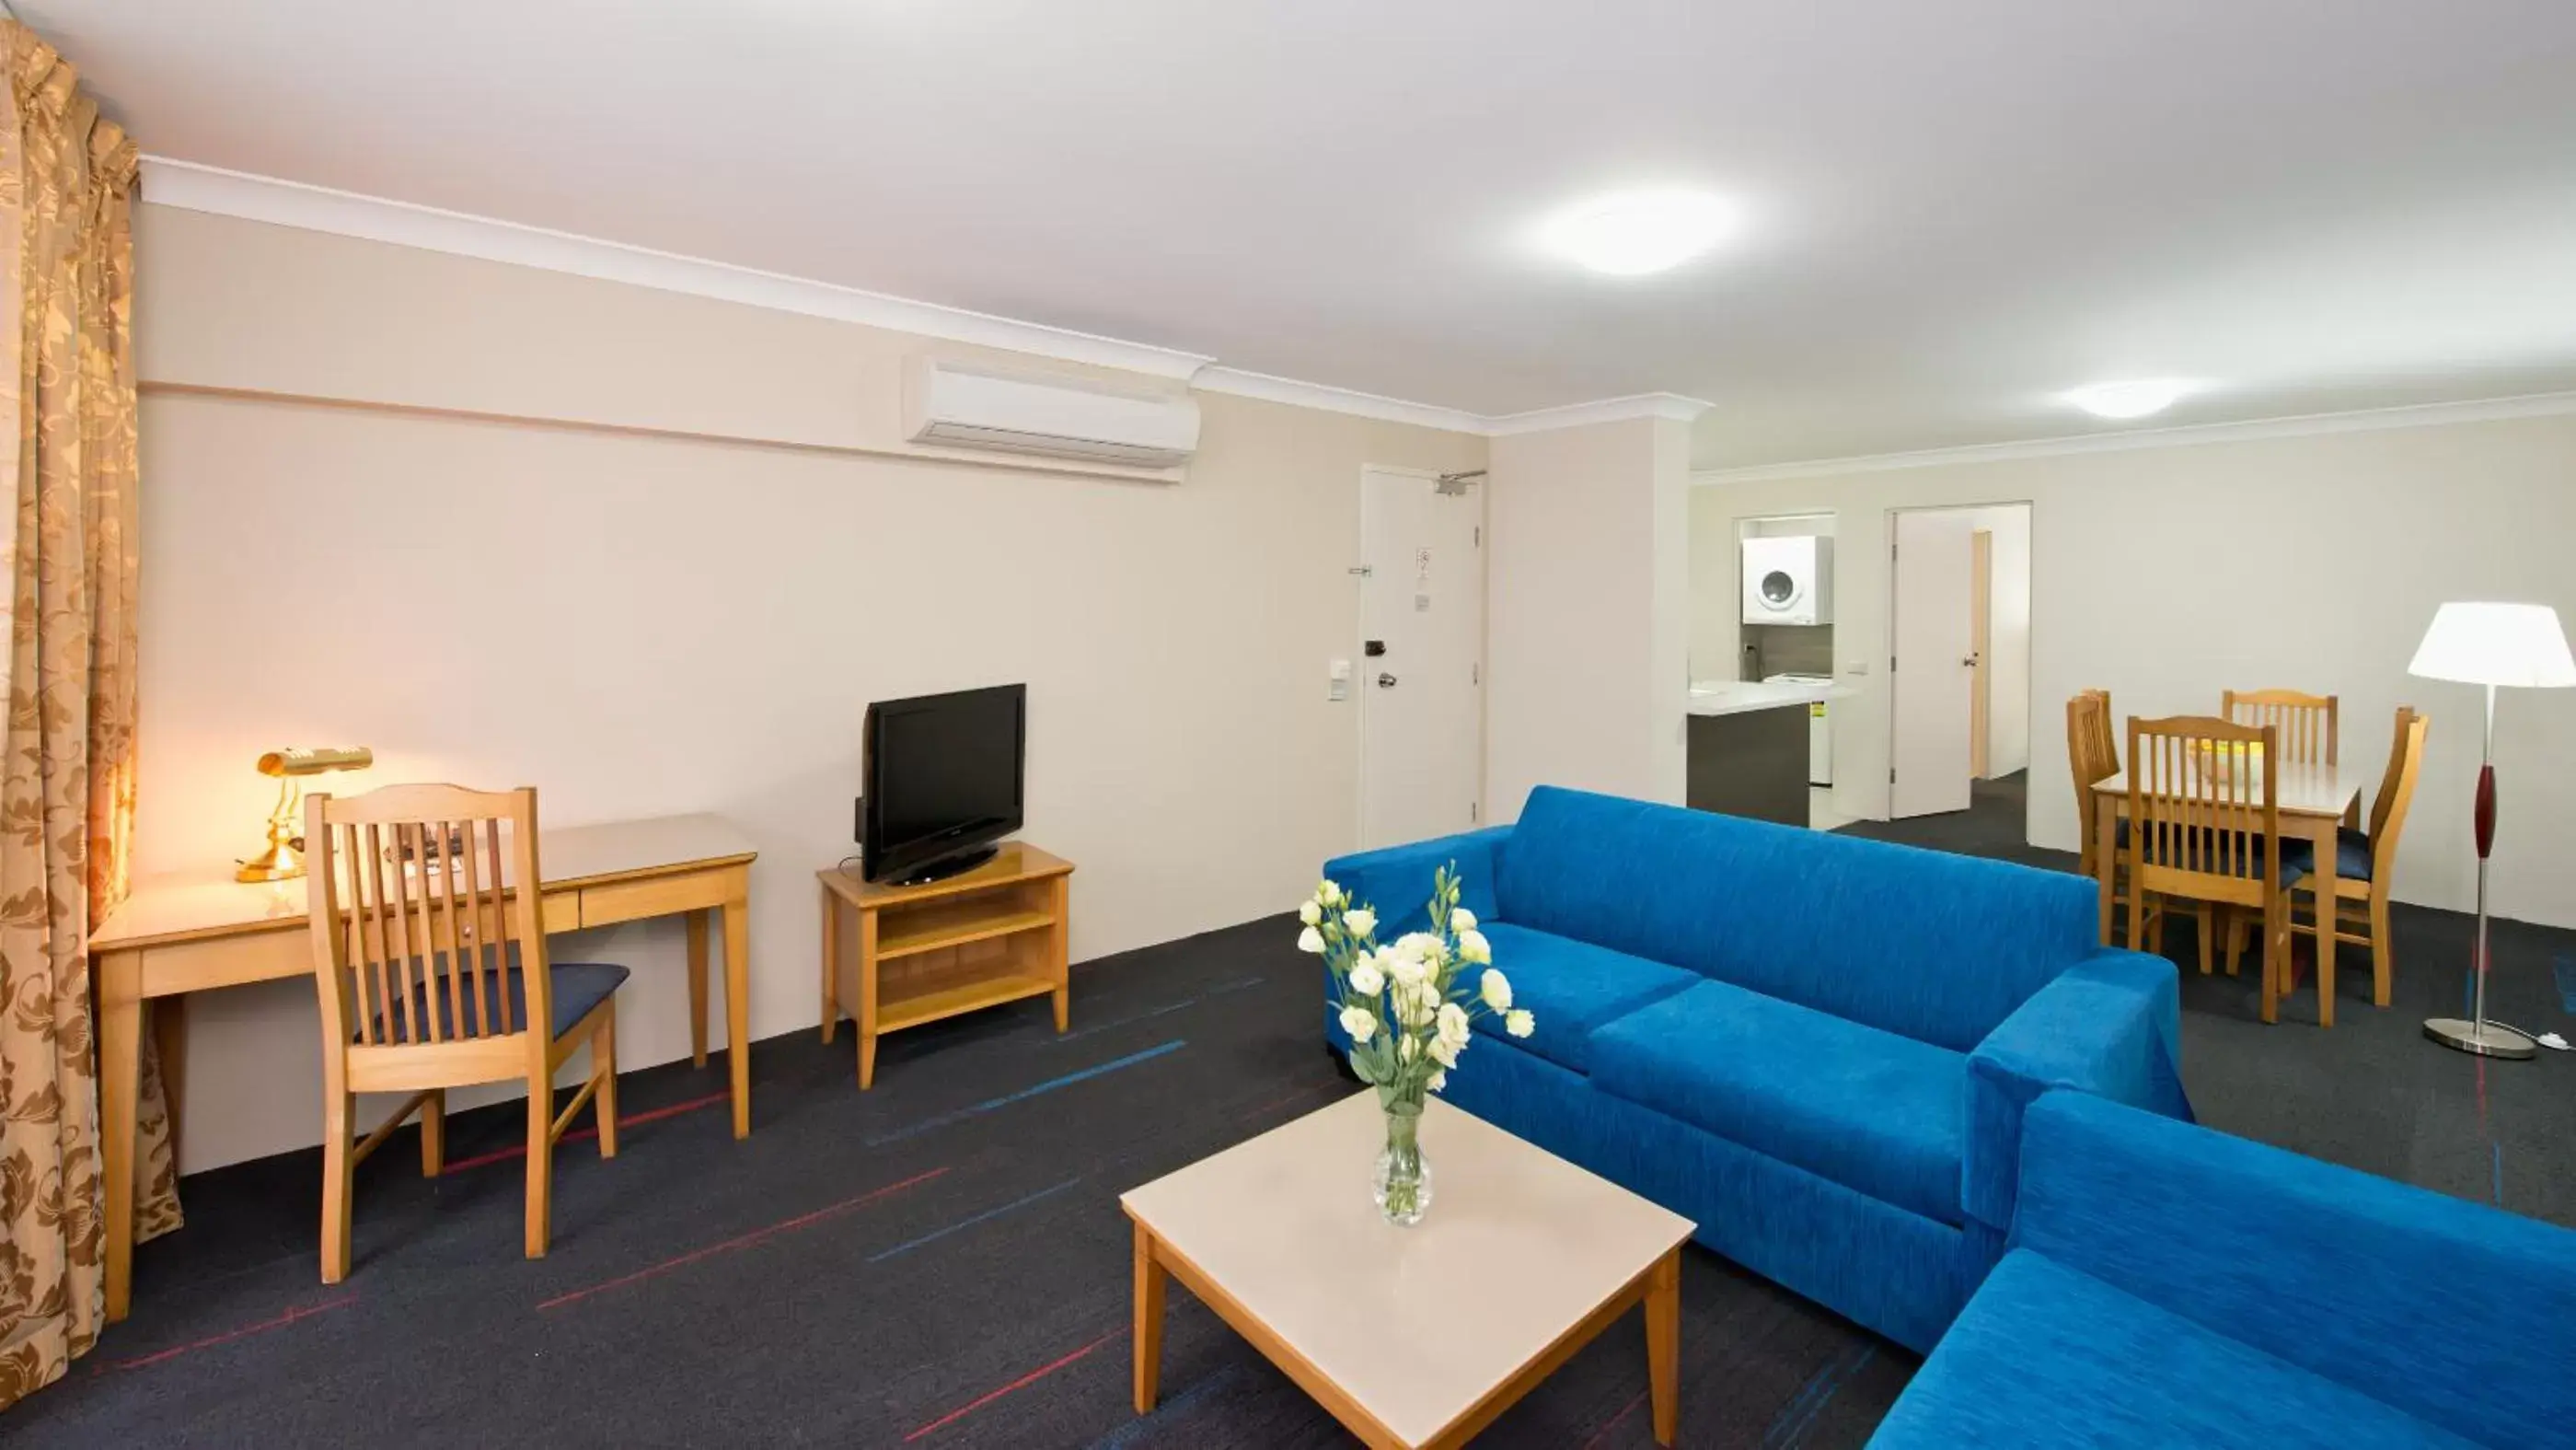 TV and multimedia, Seating Area in APX Parramatta